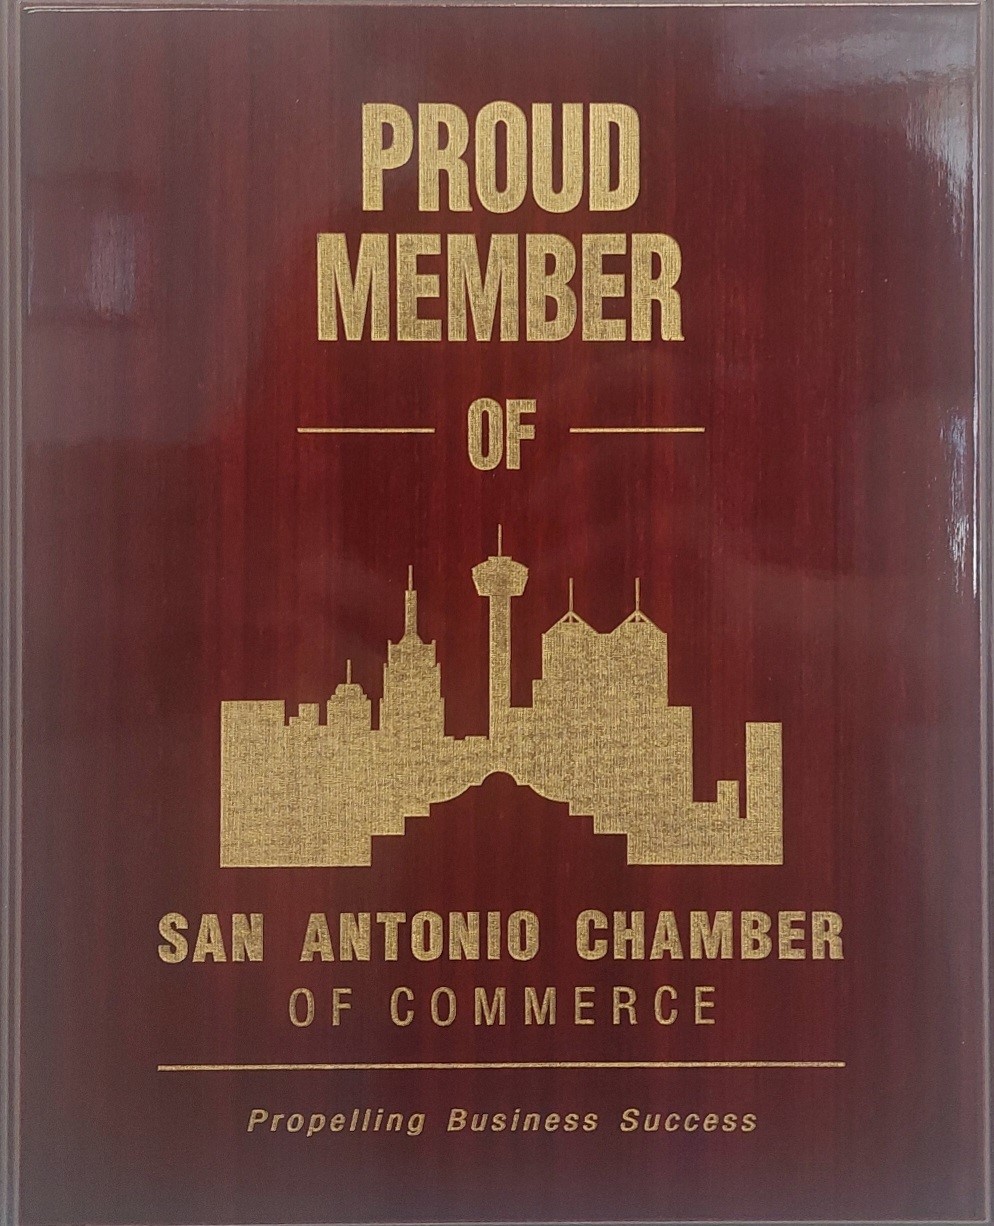 Label Edge joins San Antonio Chamber of Commerce